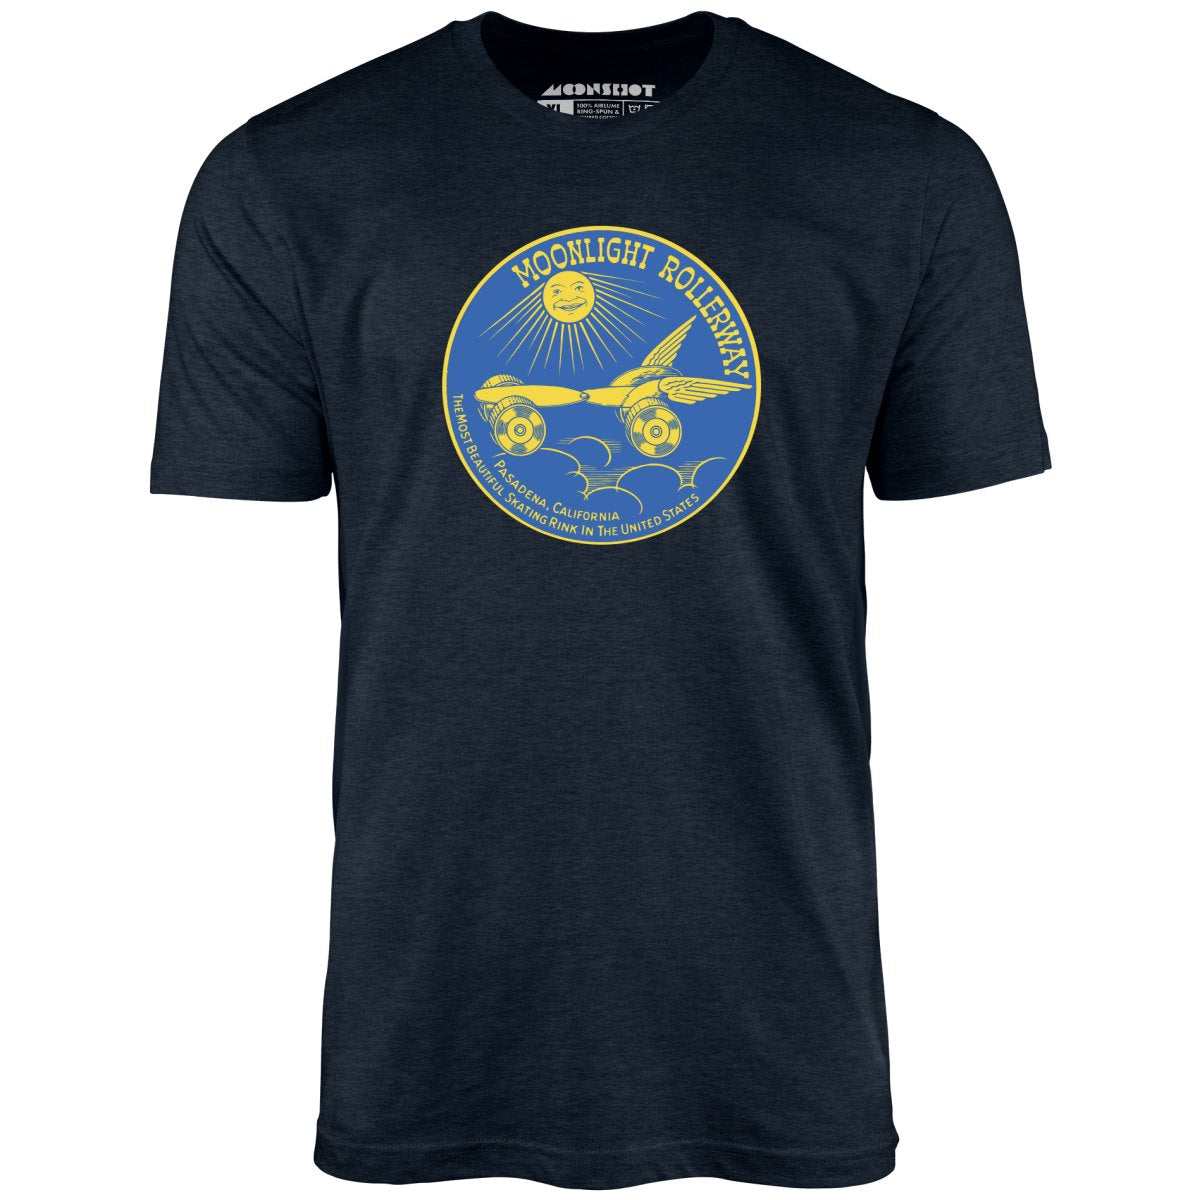 Moonlight Rollerway - Pasadena, CA - Vintage Roller Rink - Unisex T-Shirt